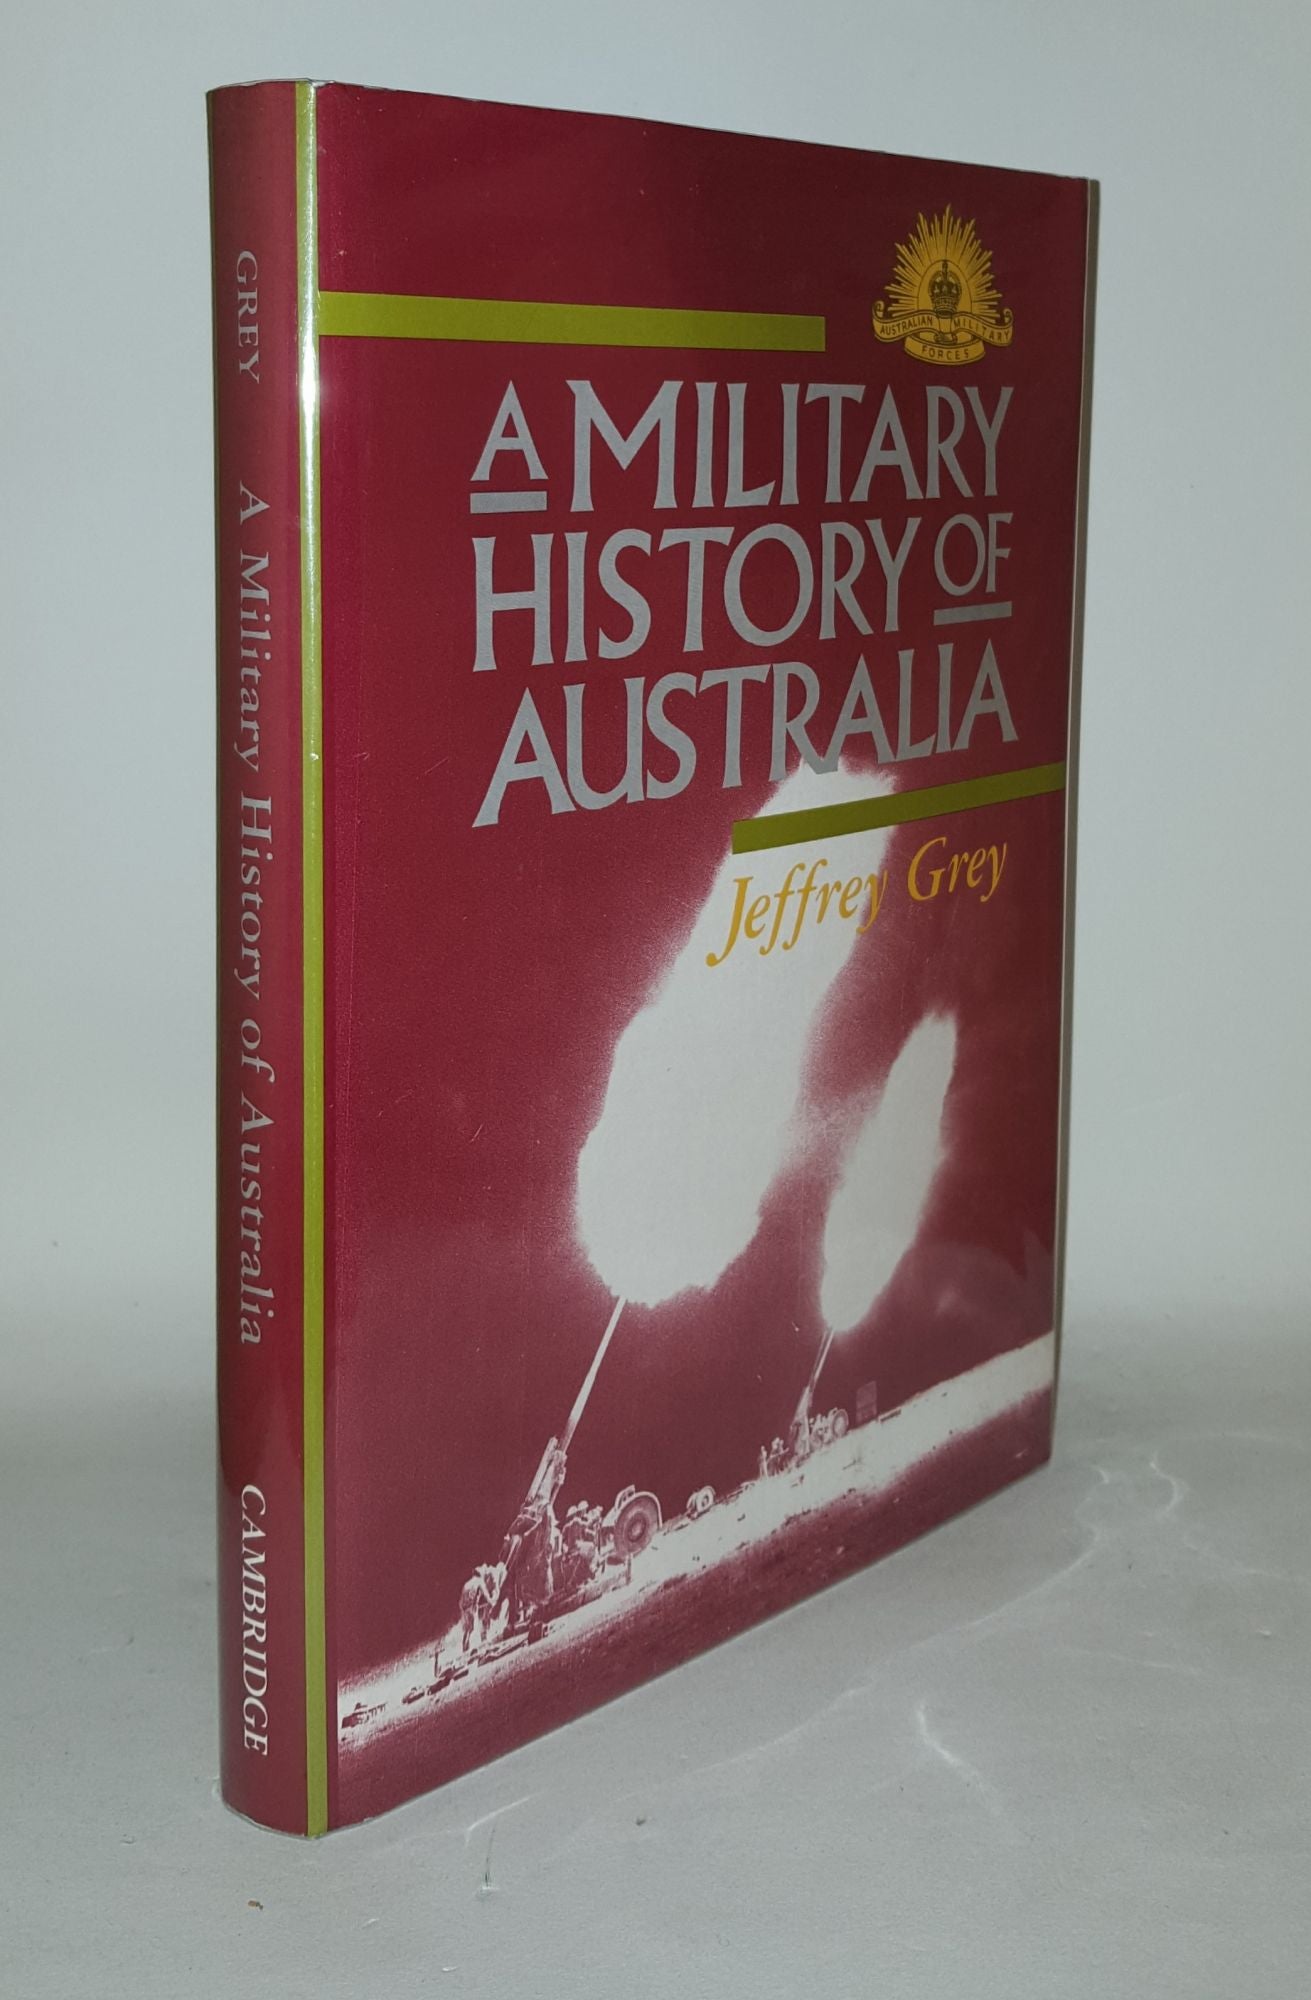 GREY Jeffrey - A Military History of Australia